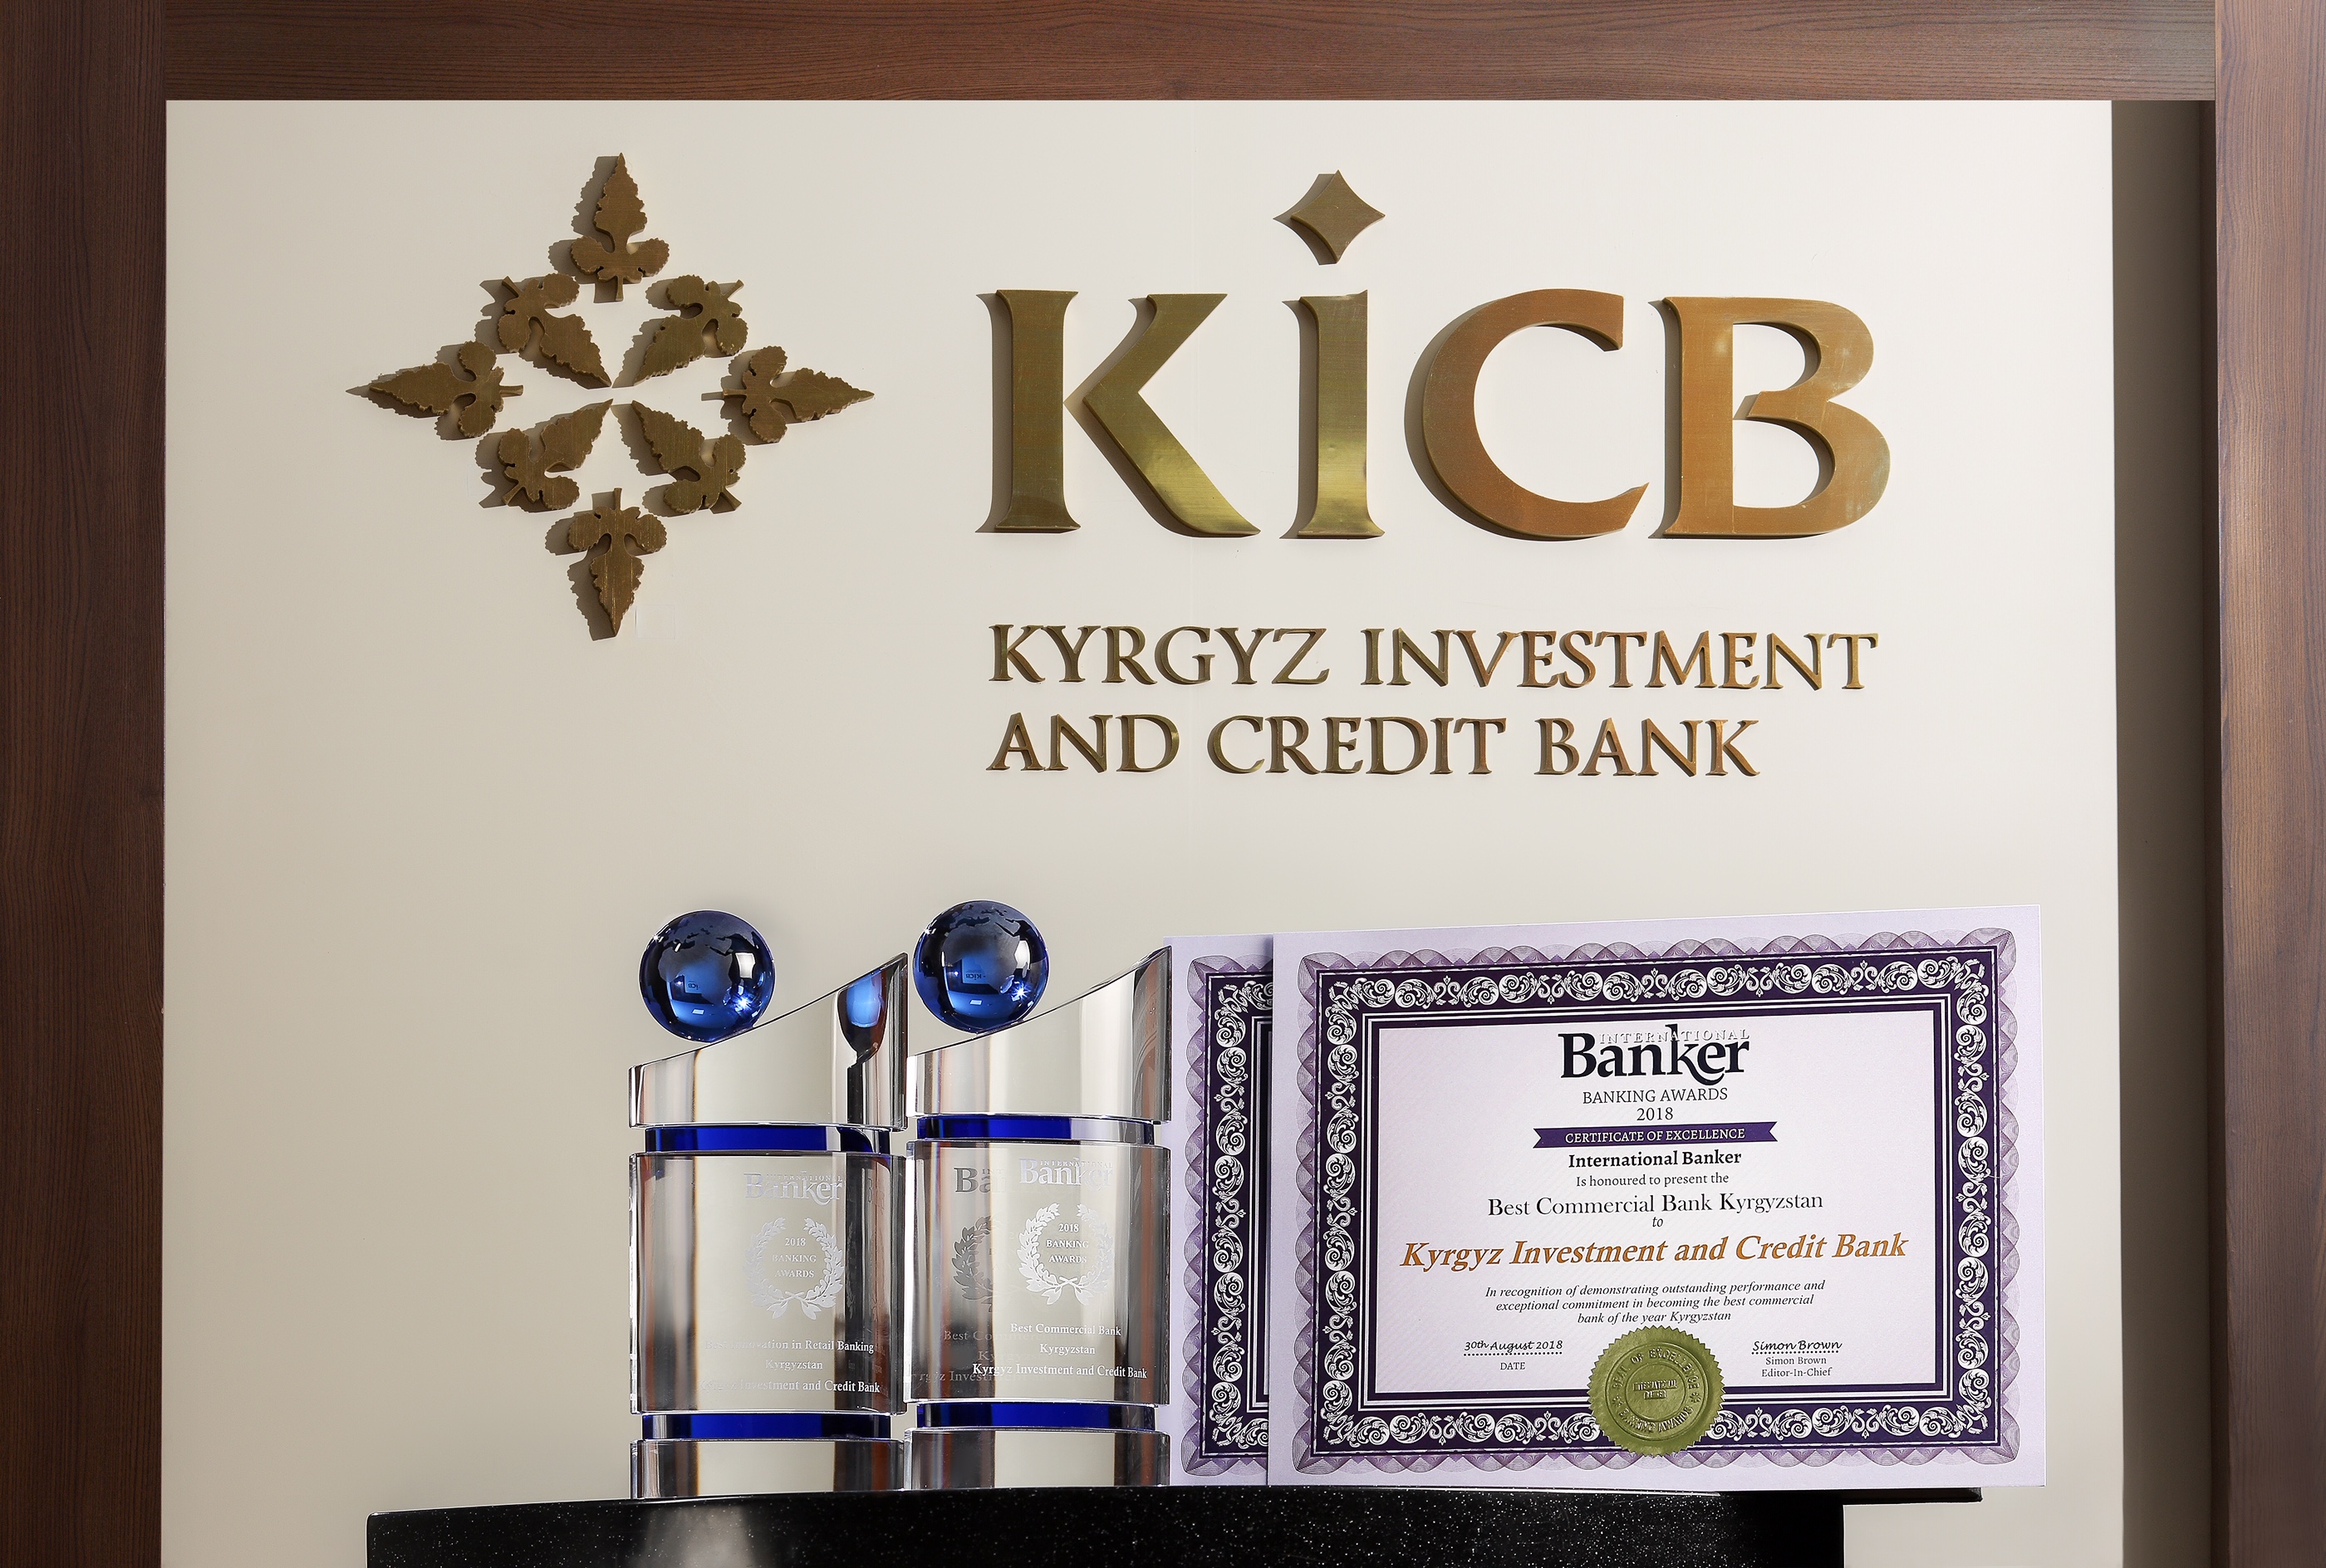 Kicb банк кыргызстан